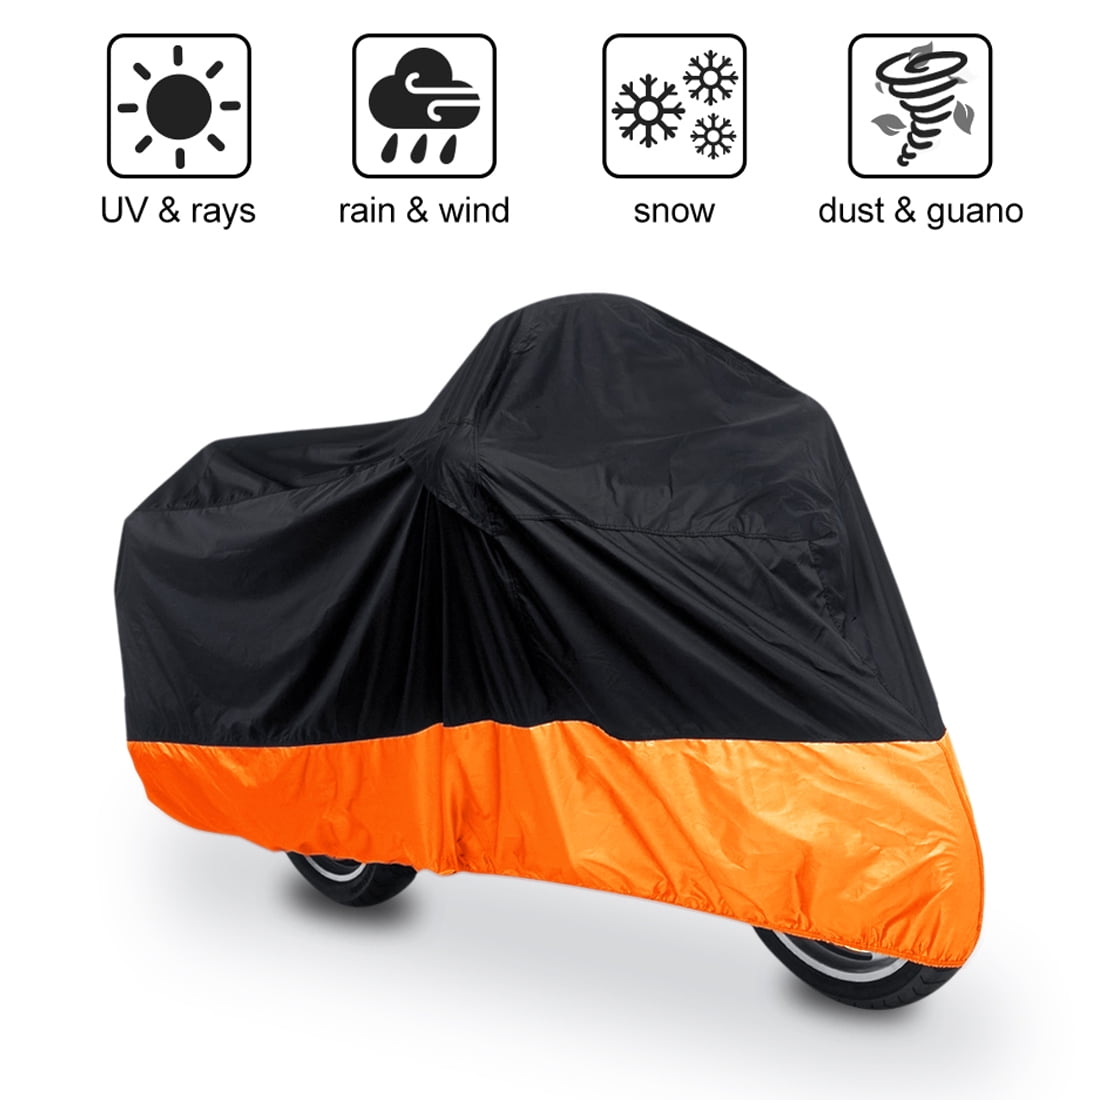 dalianda Black & Orange Motorcycle Cover for Harley FXSTB Night Train UV Dust Prevention XL 